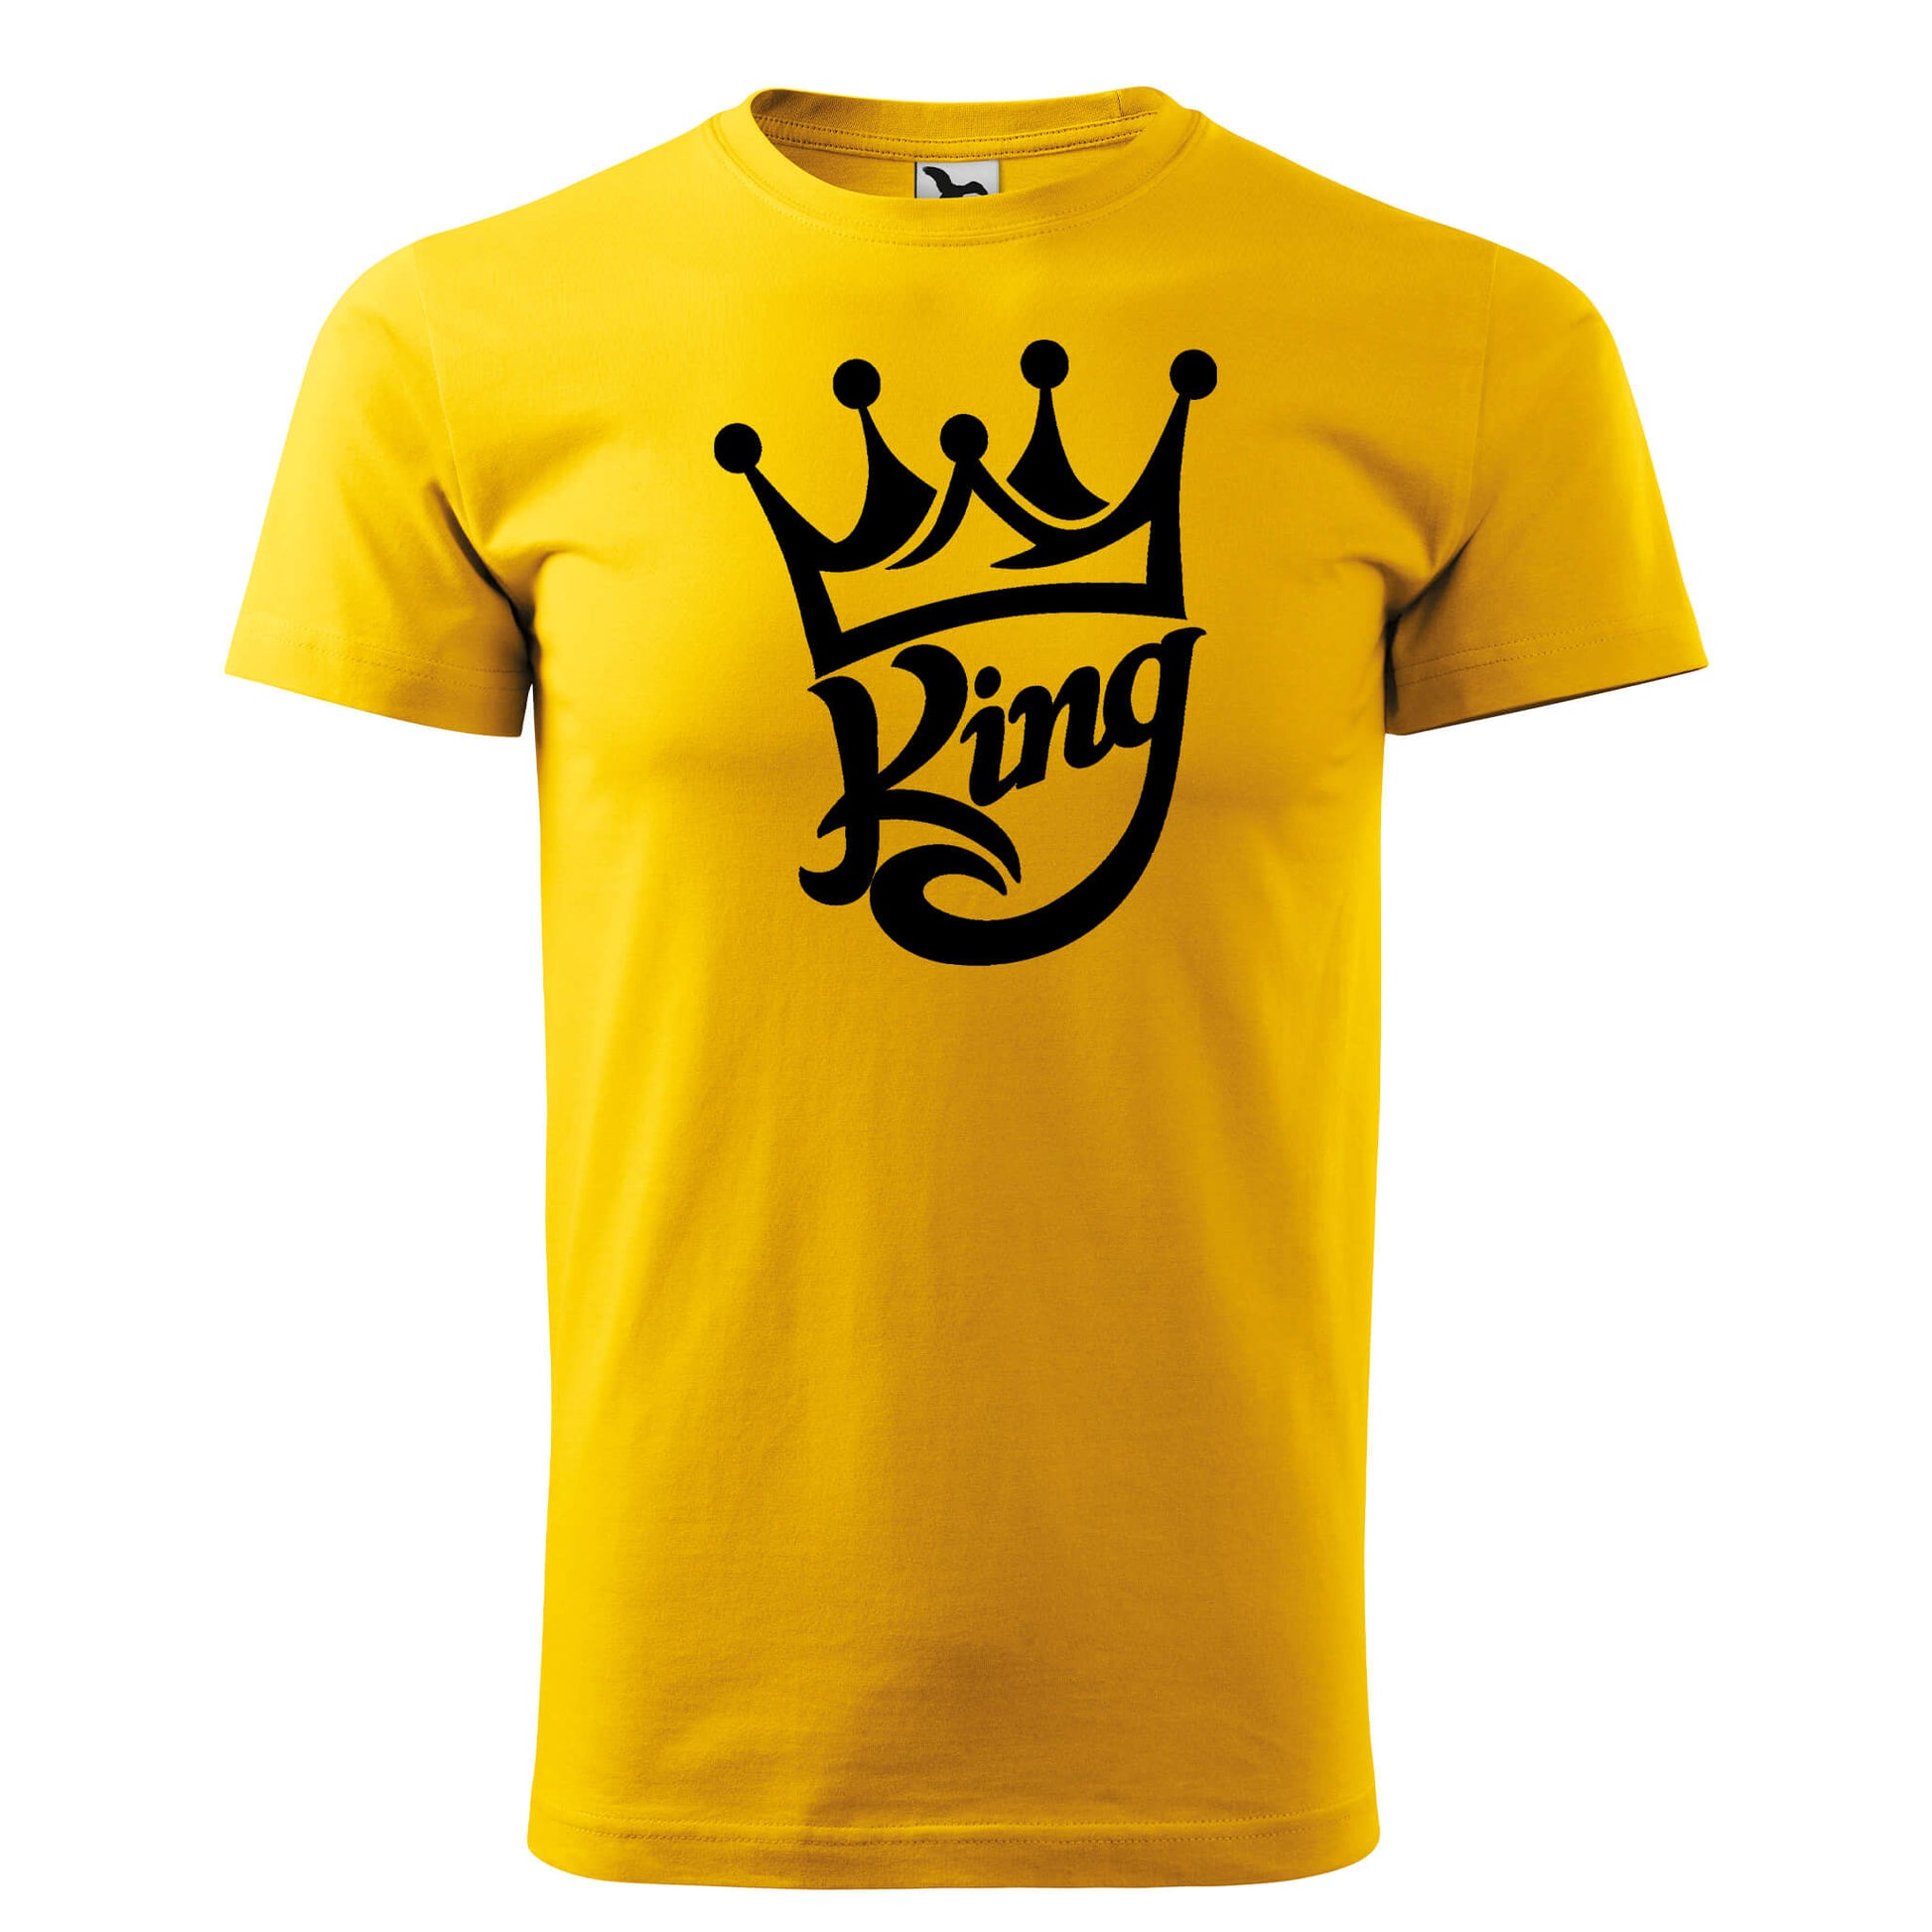 T-shirt - King - rvdesignprint